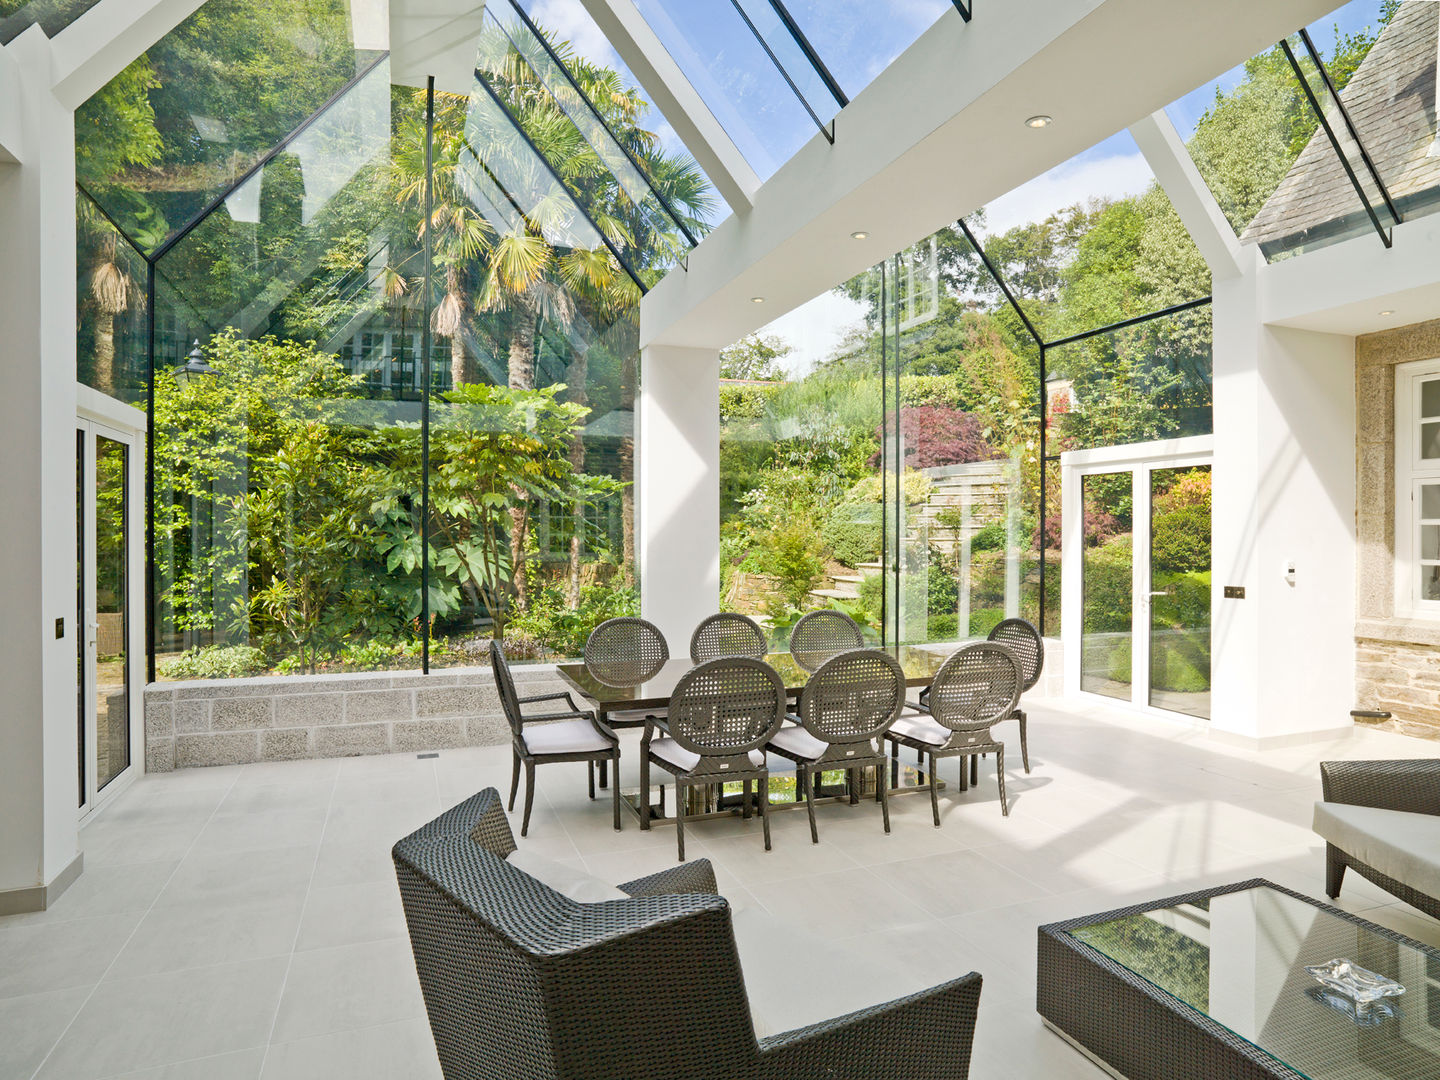 Structural Glass Conservatory, Cornwall homify Anexos de estilo moderno Vidrio